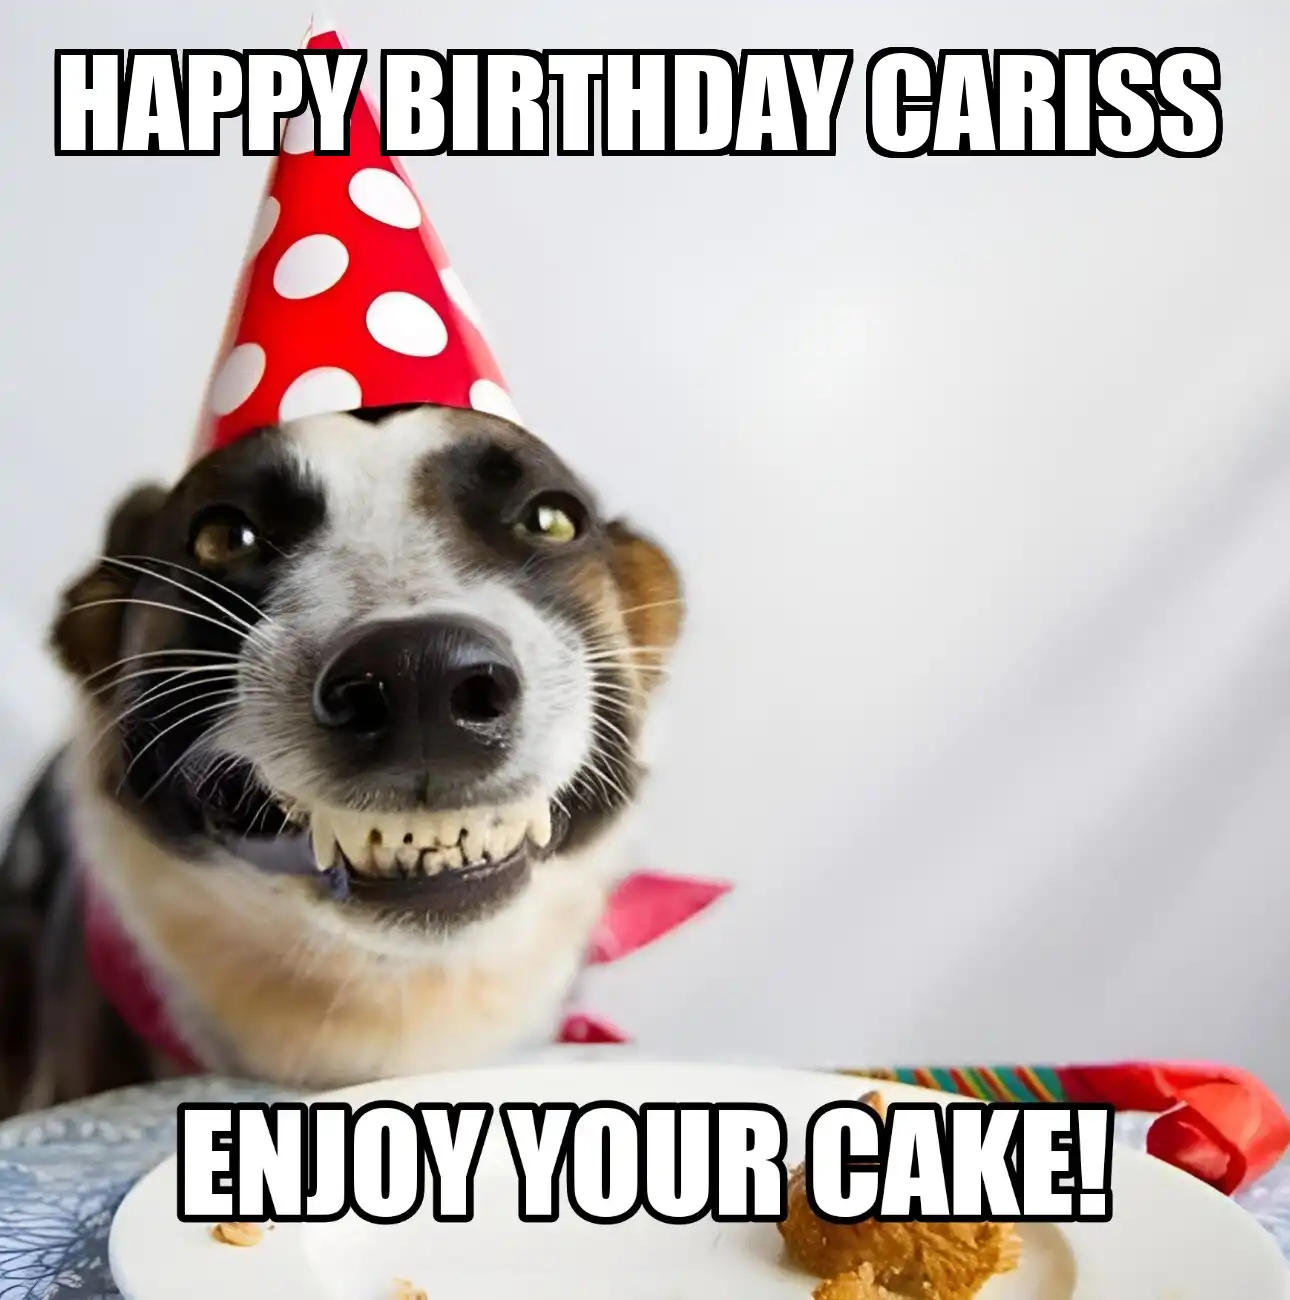 Happy Birthday Cariss Enjoy Your Cake Dog Meme